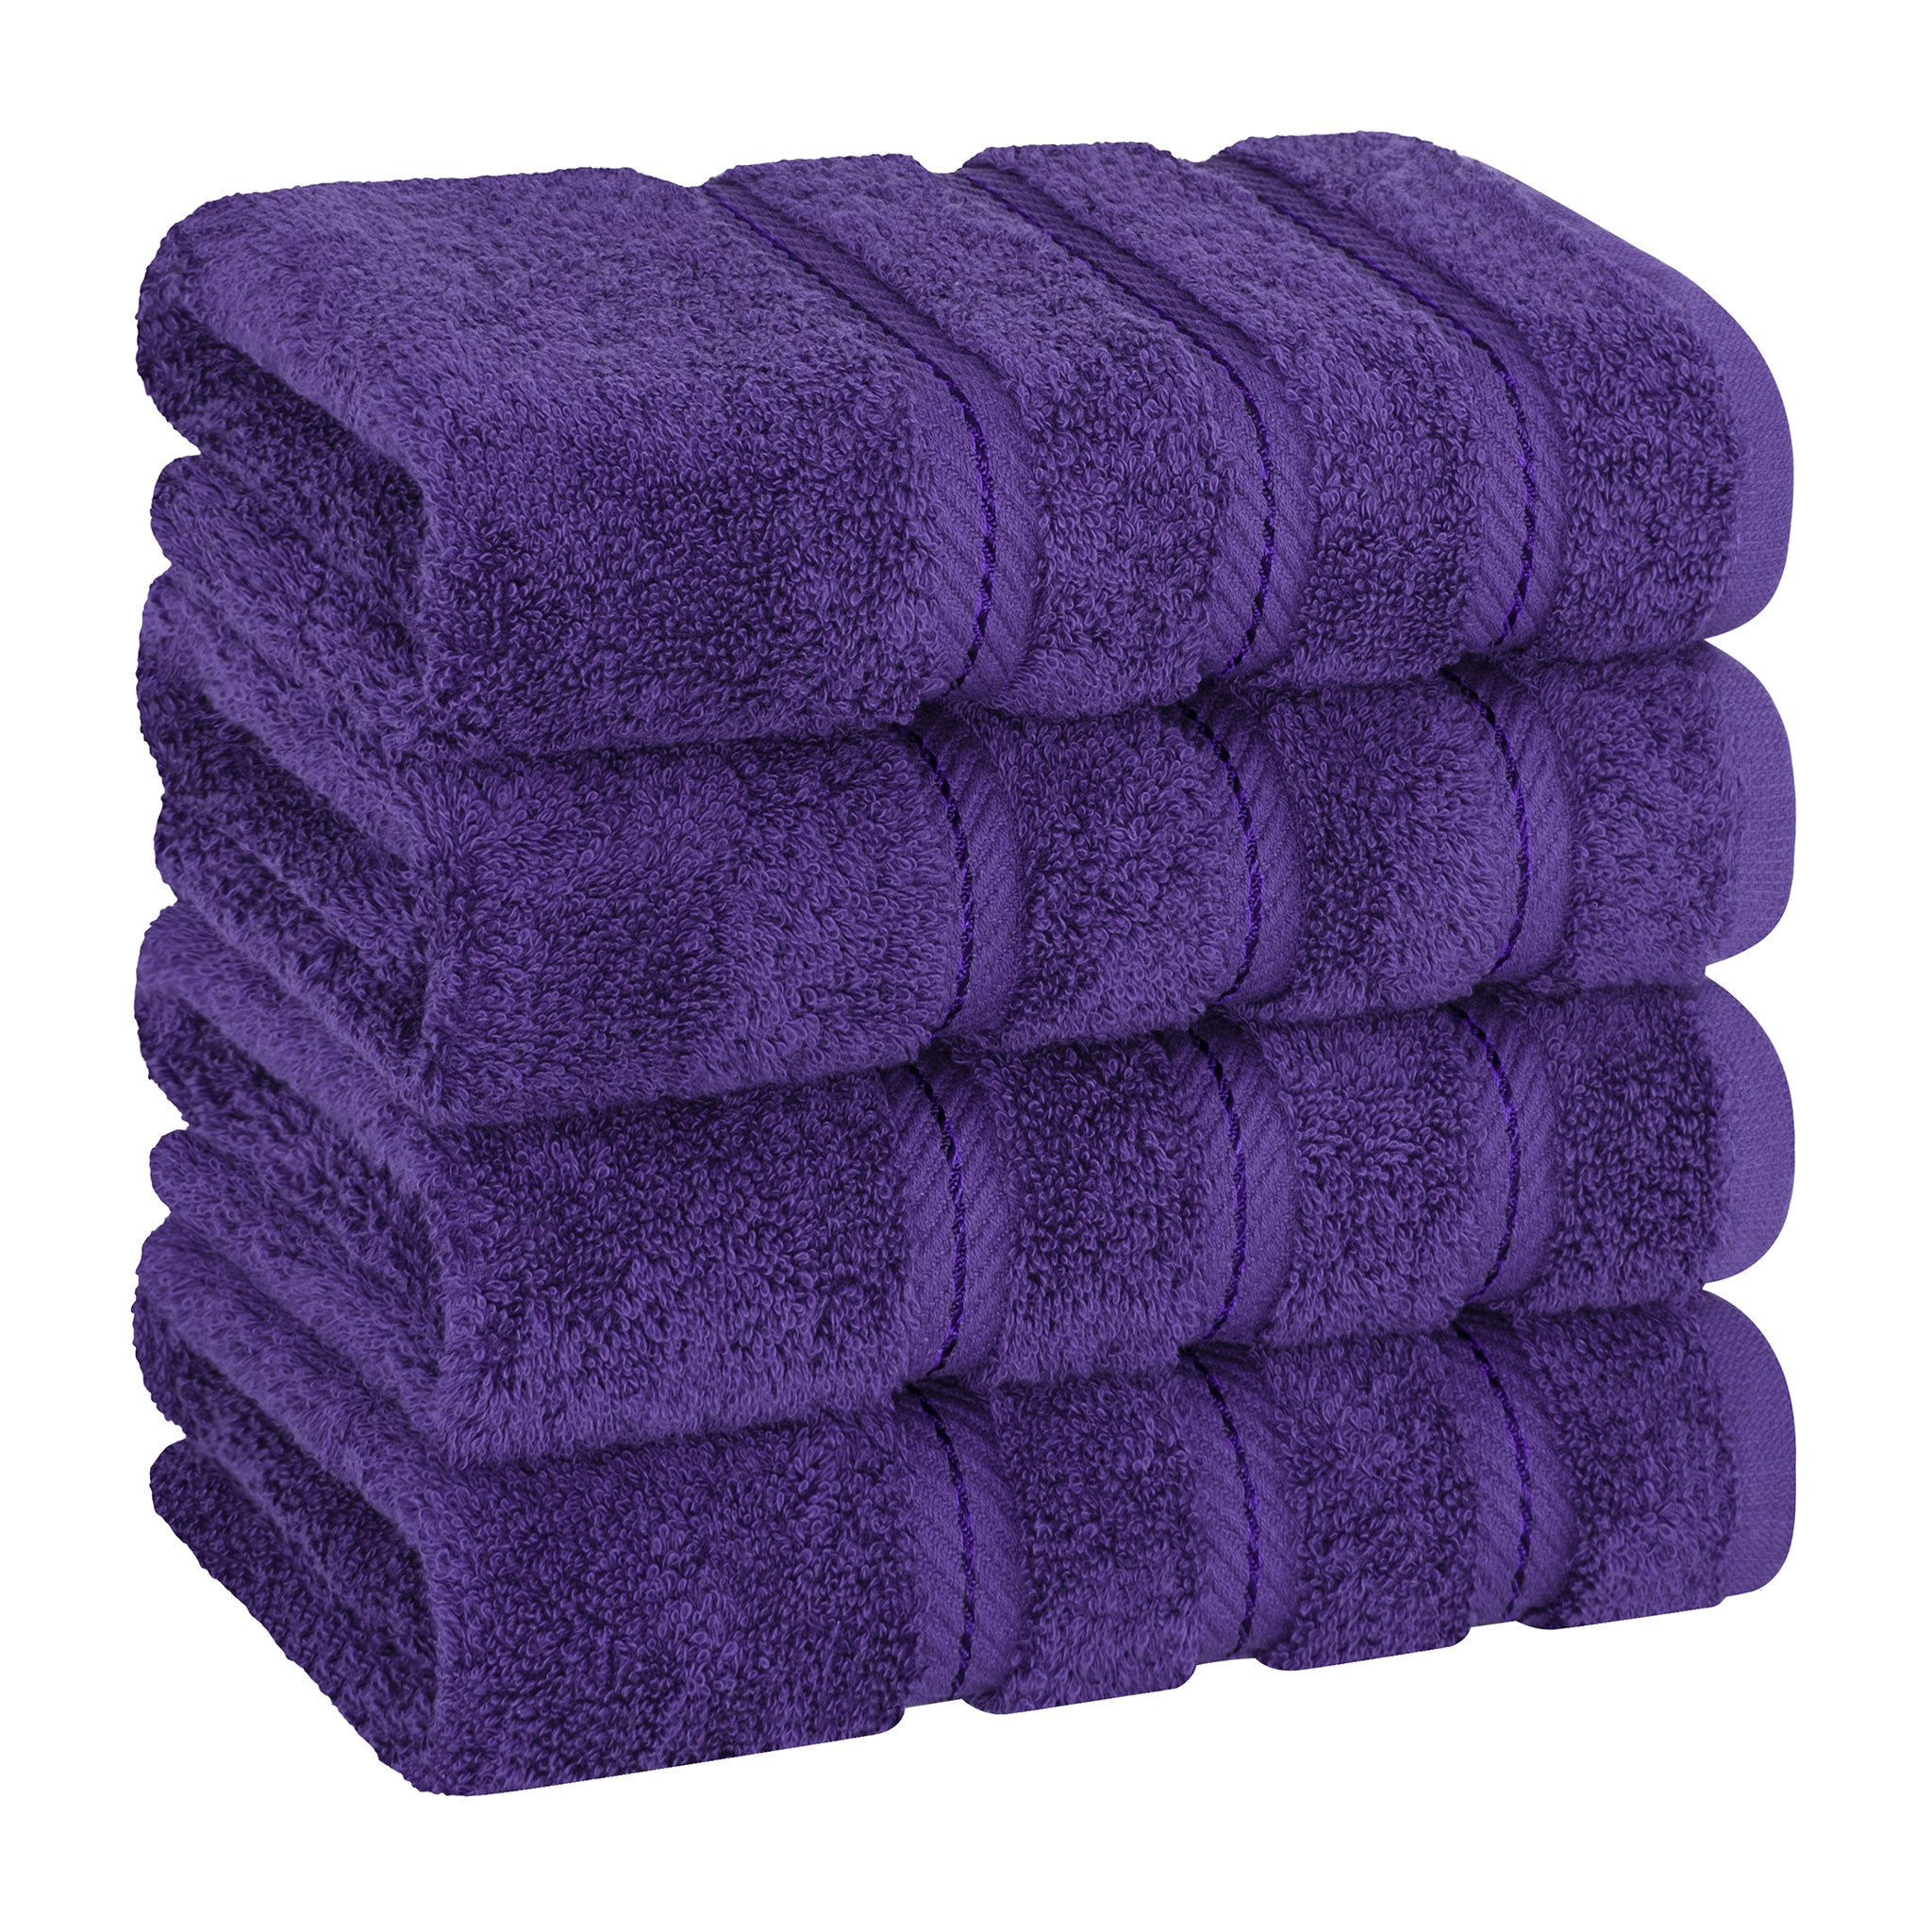  American Soft Linen 100% Turkish Cotton 4 Pack Hand Towel Set  purple-1